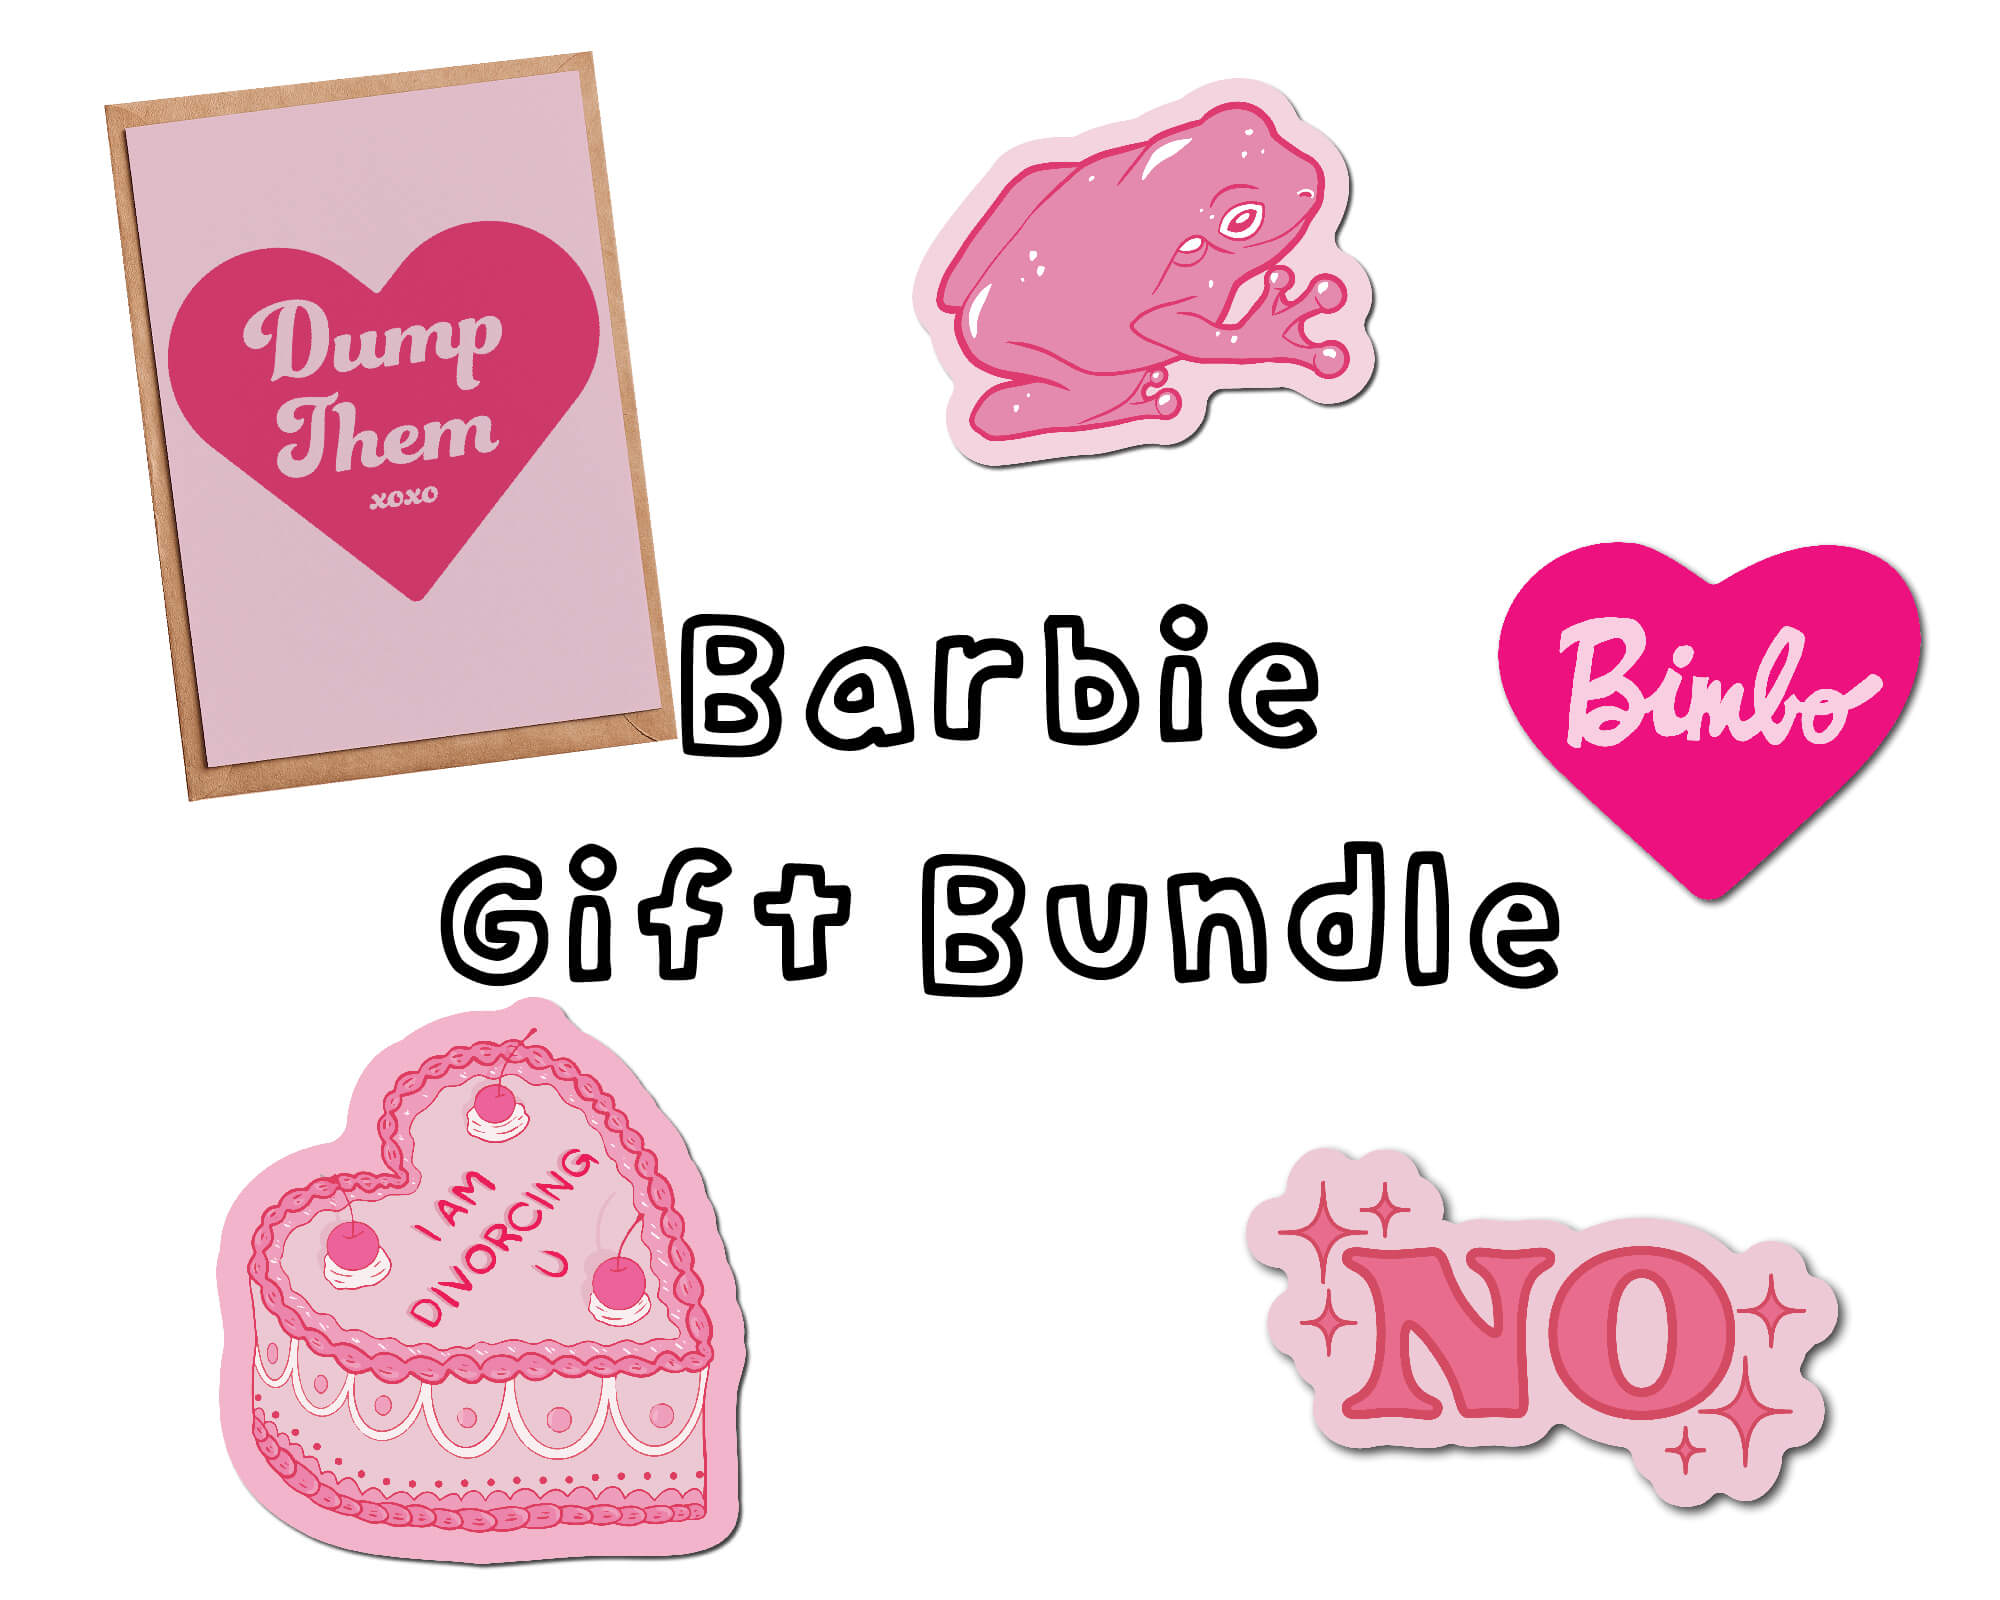 Barbie Gift Bundle